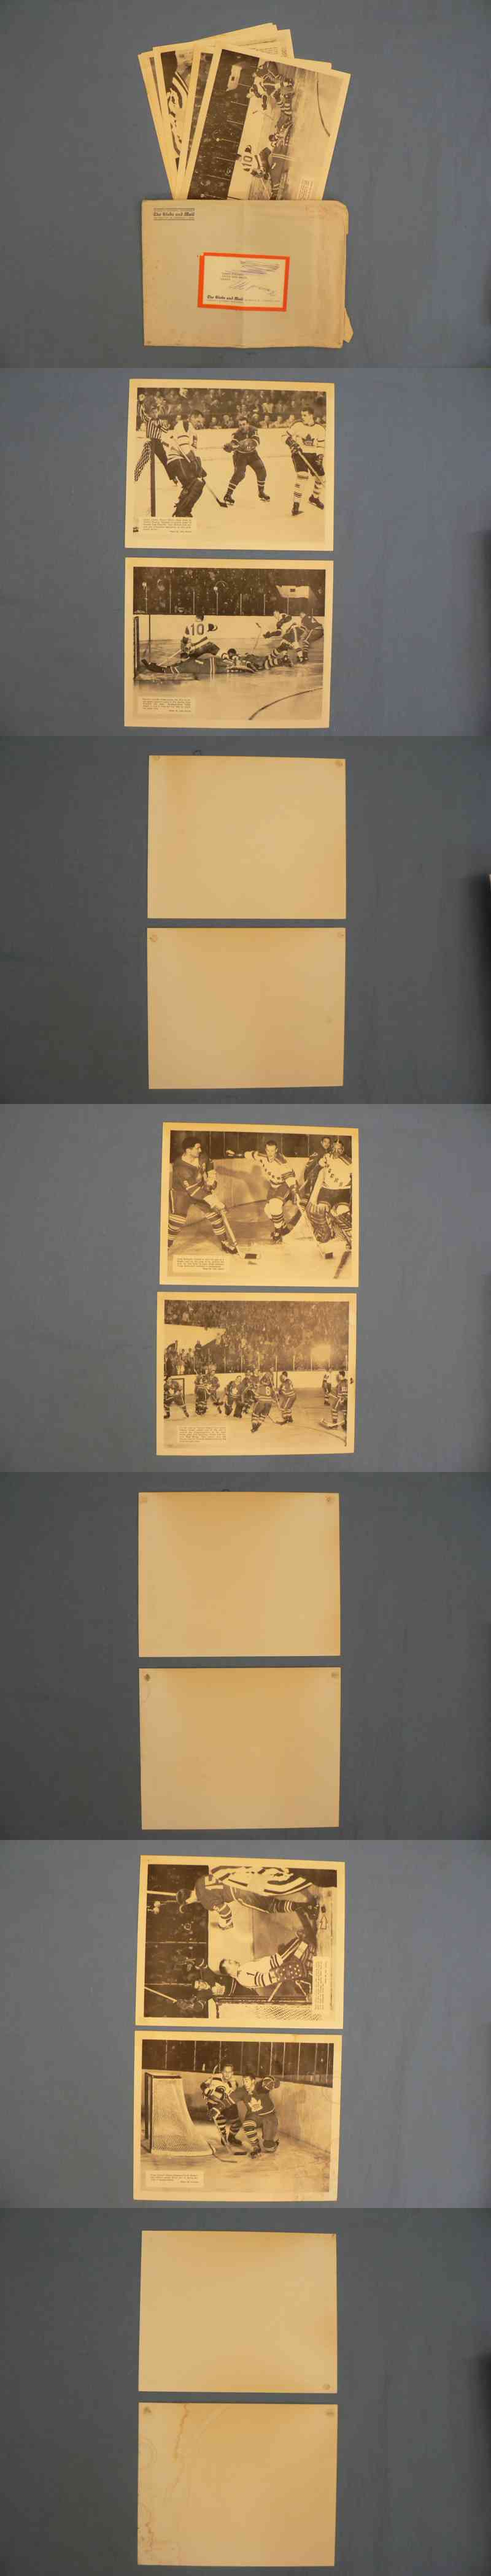 1963 GLOBE AND WAIL TORONTO MAPLE LEAFS PHOTO LOT OF 7 & ENVELOPE photo